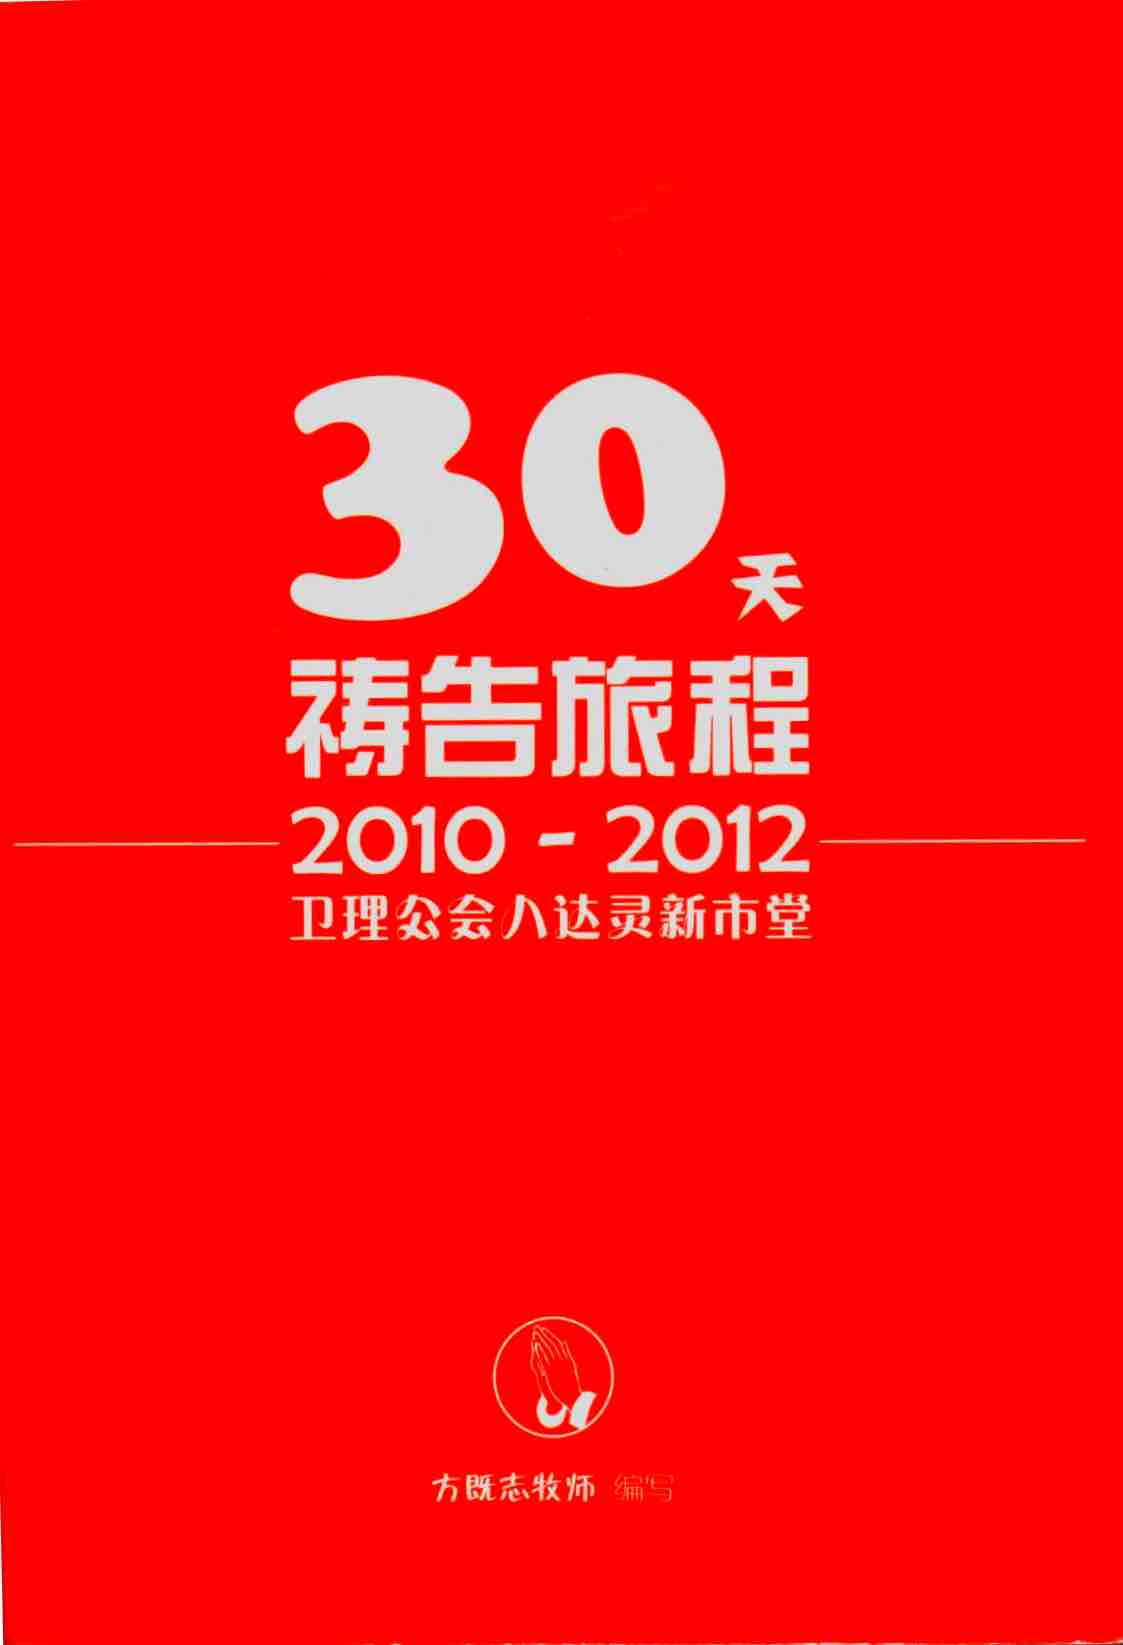 Cover of 30天禱吿旅程 2010 - 2012